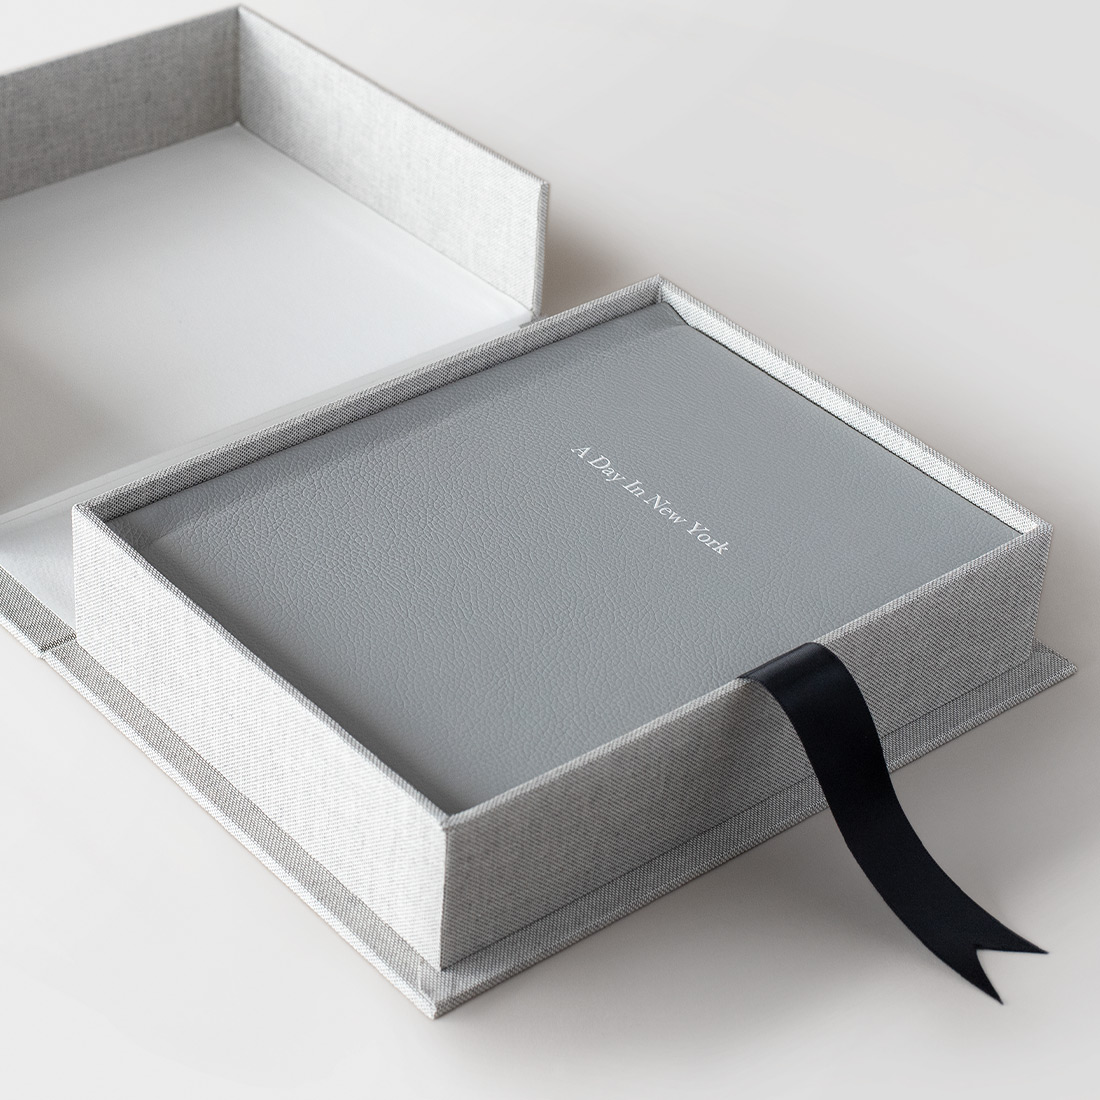 Leather Photo Album in Presentation Box